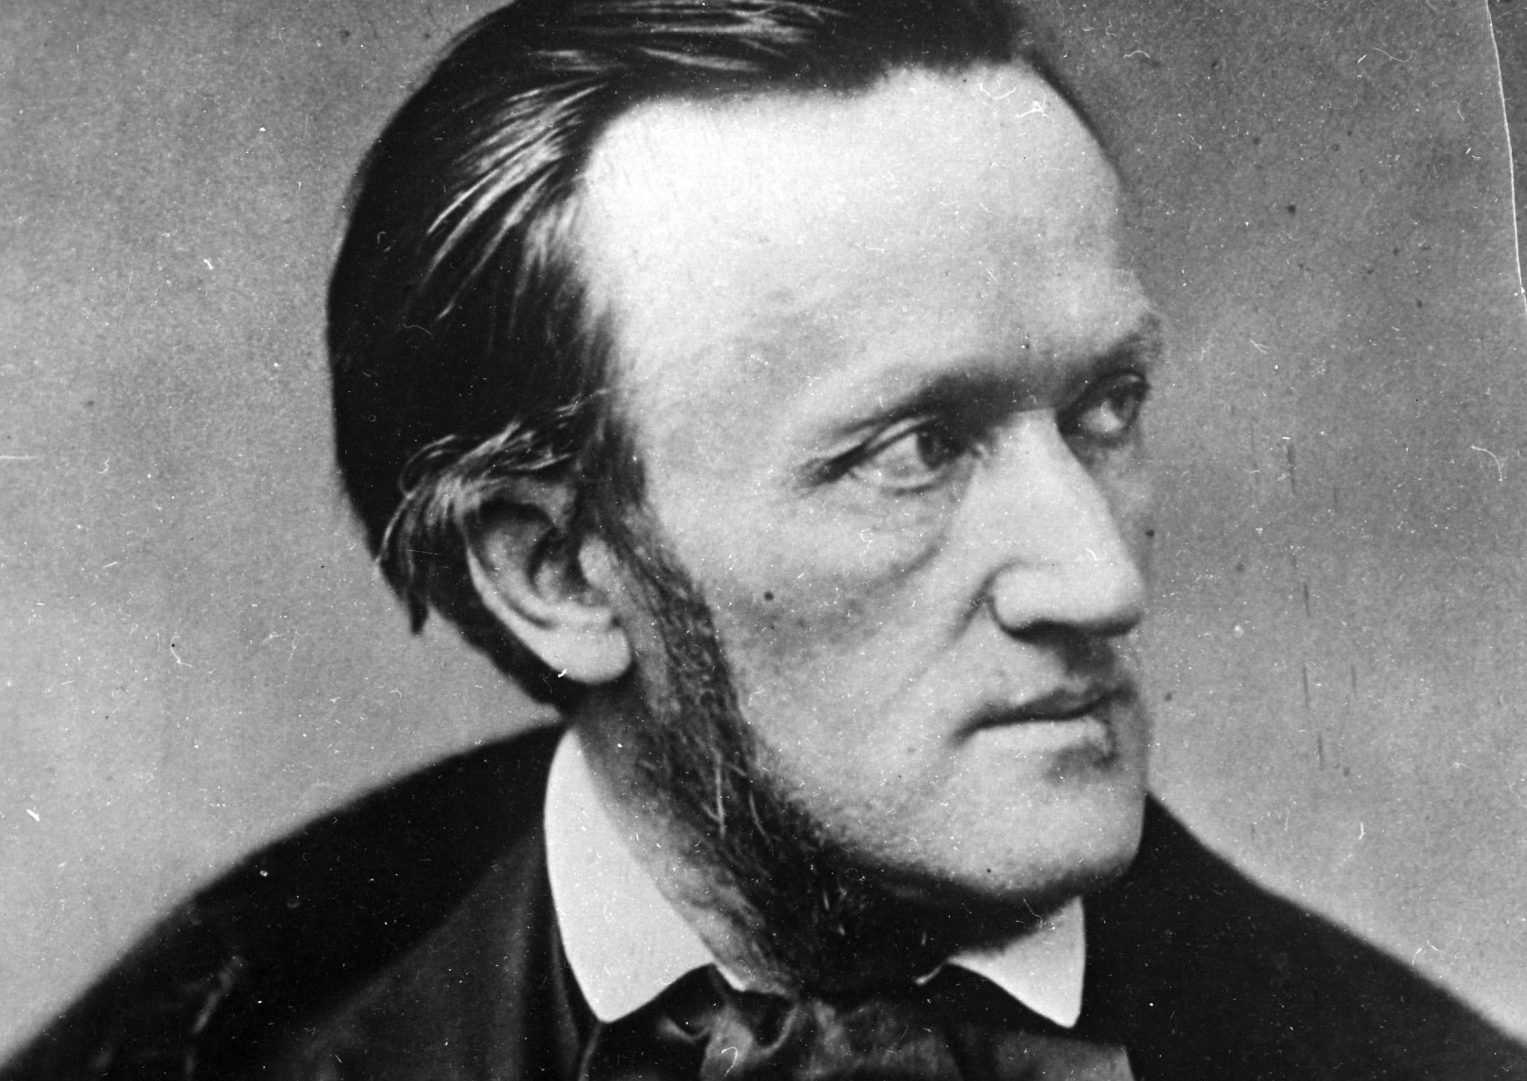 Wagner: moralist or monster?